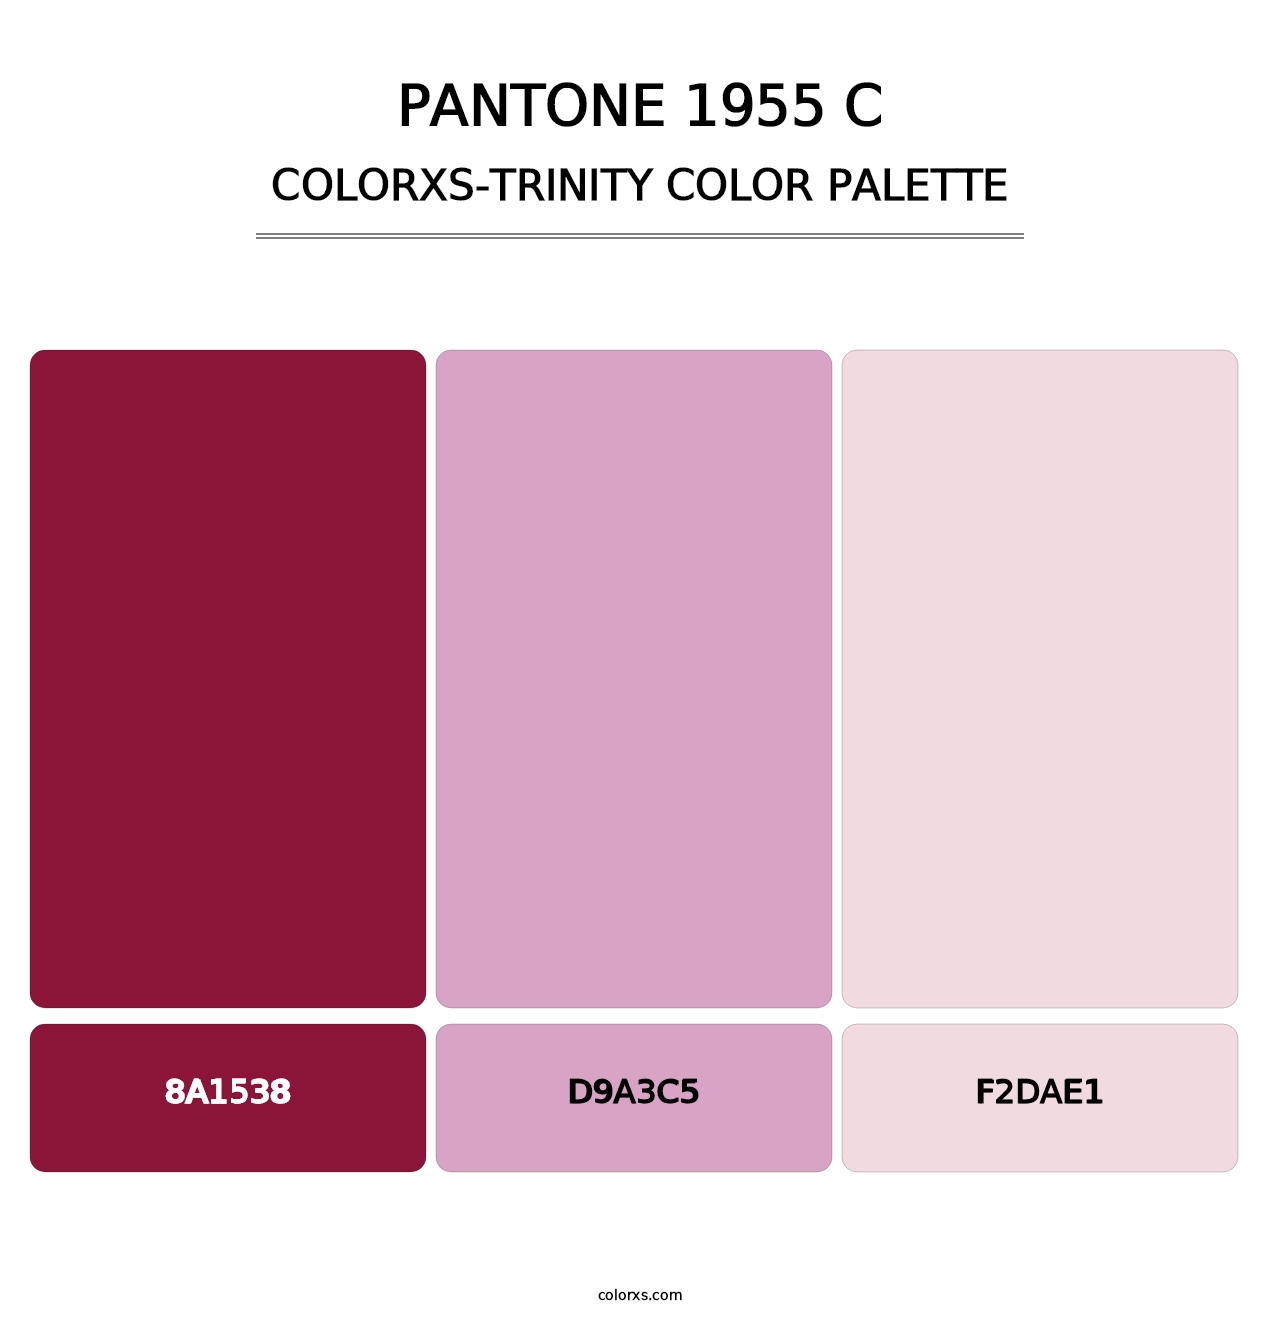 PANTONE 1955 C - Colorxs Trinity Palette